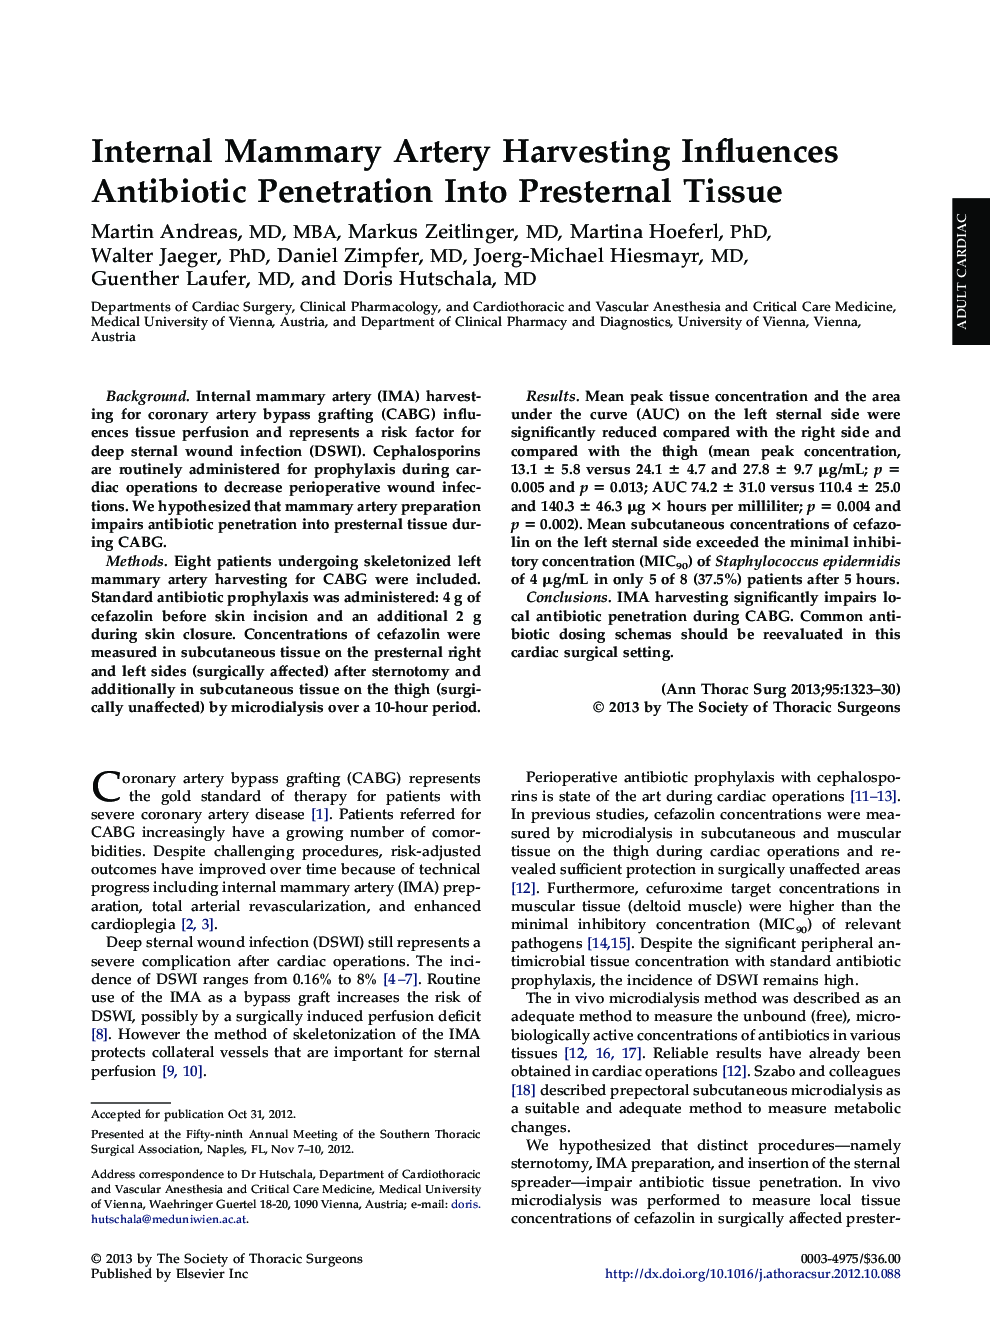 Internal Mammary Artery Harvesting Influences Antibiotic Penetration Into Presternal Tissue